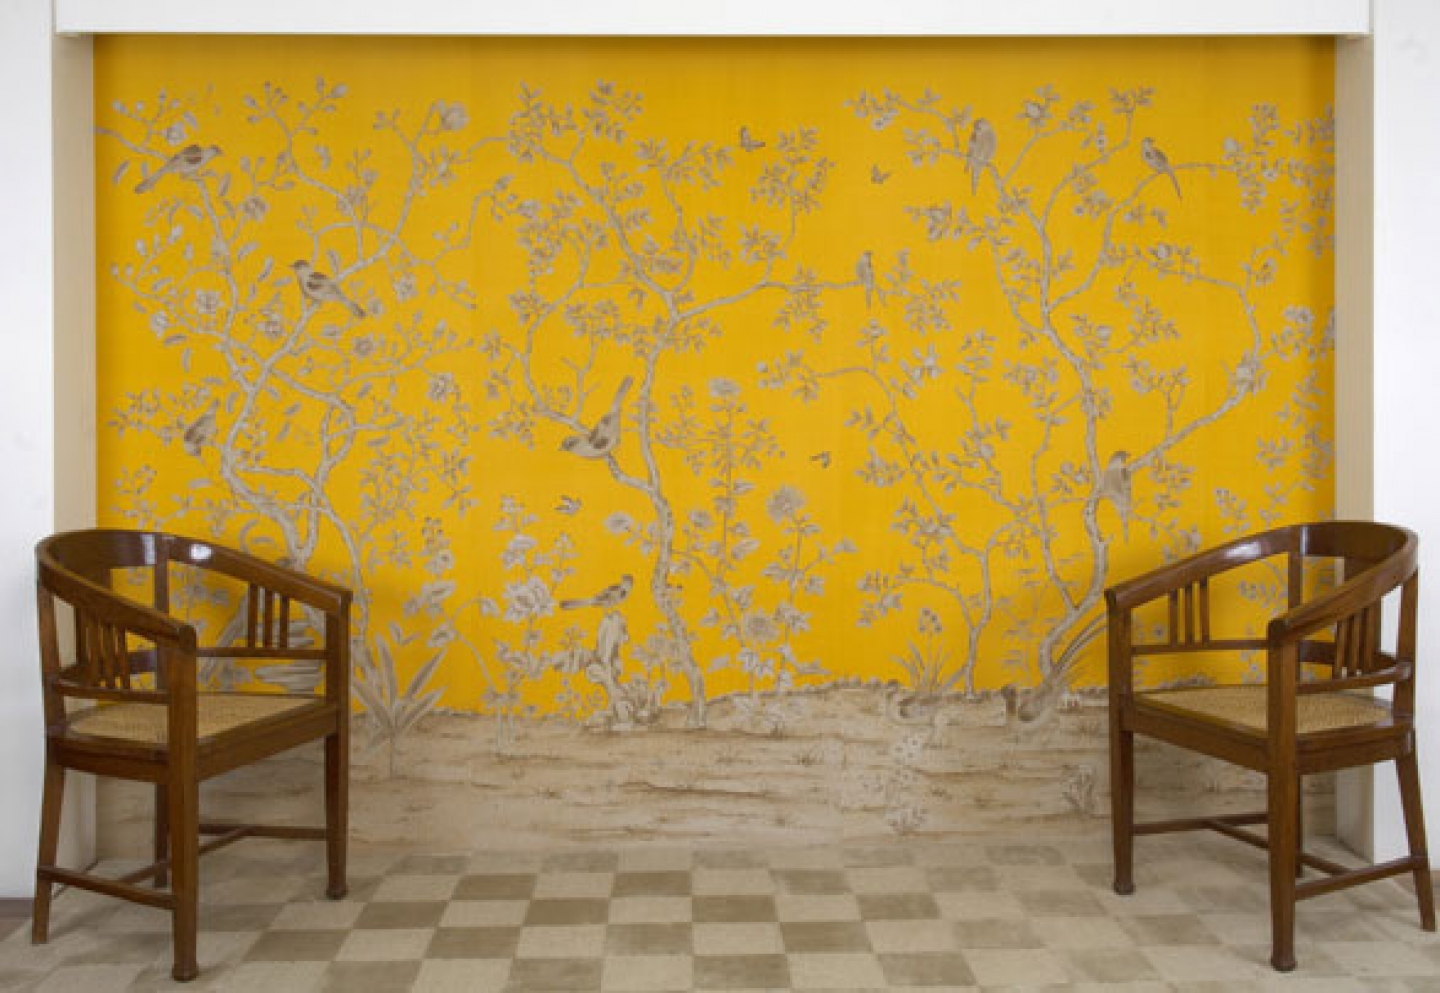  interiordesignforhouses com wall wallpaper yellow wallpaper